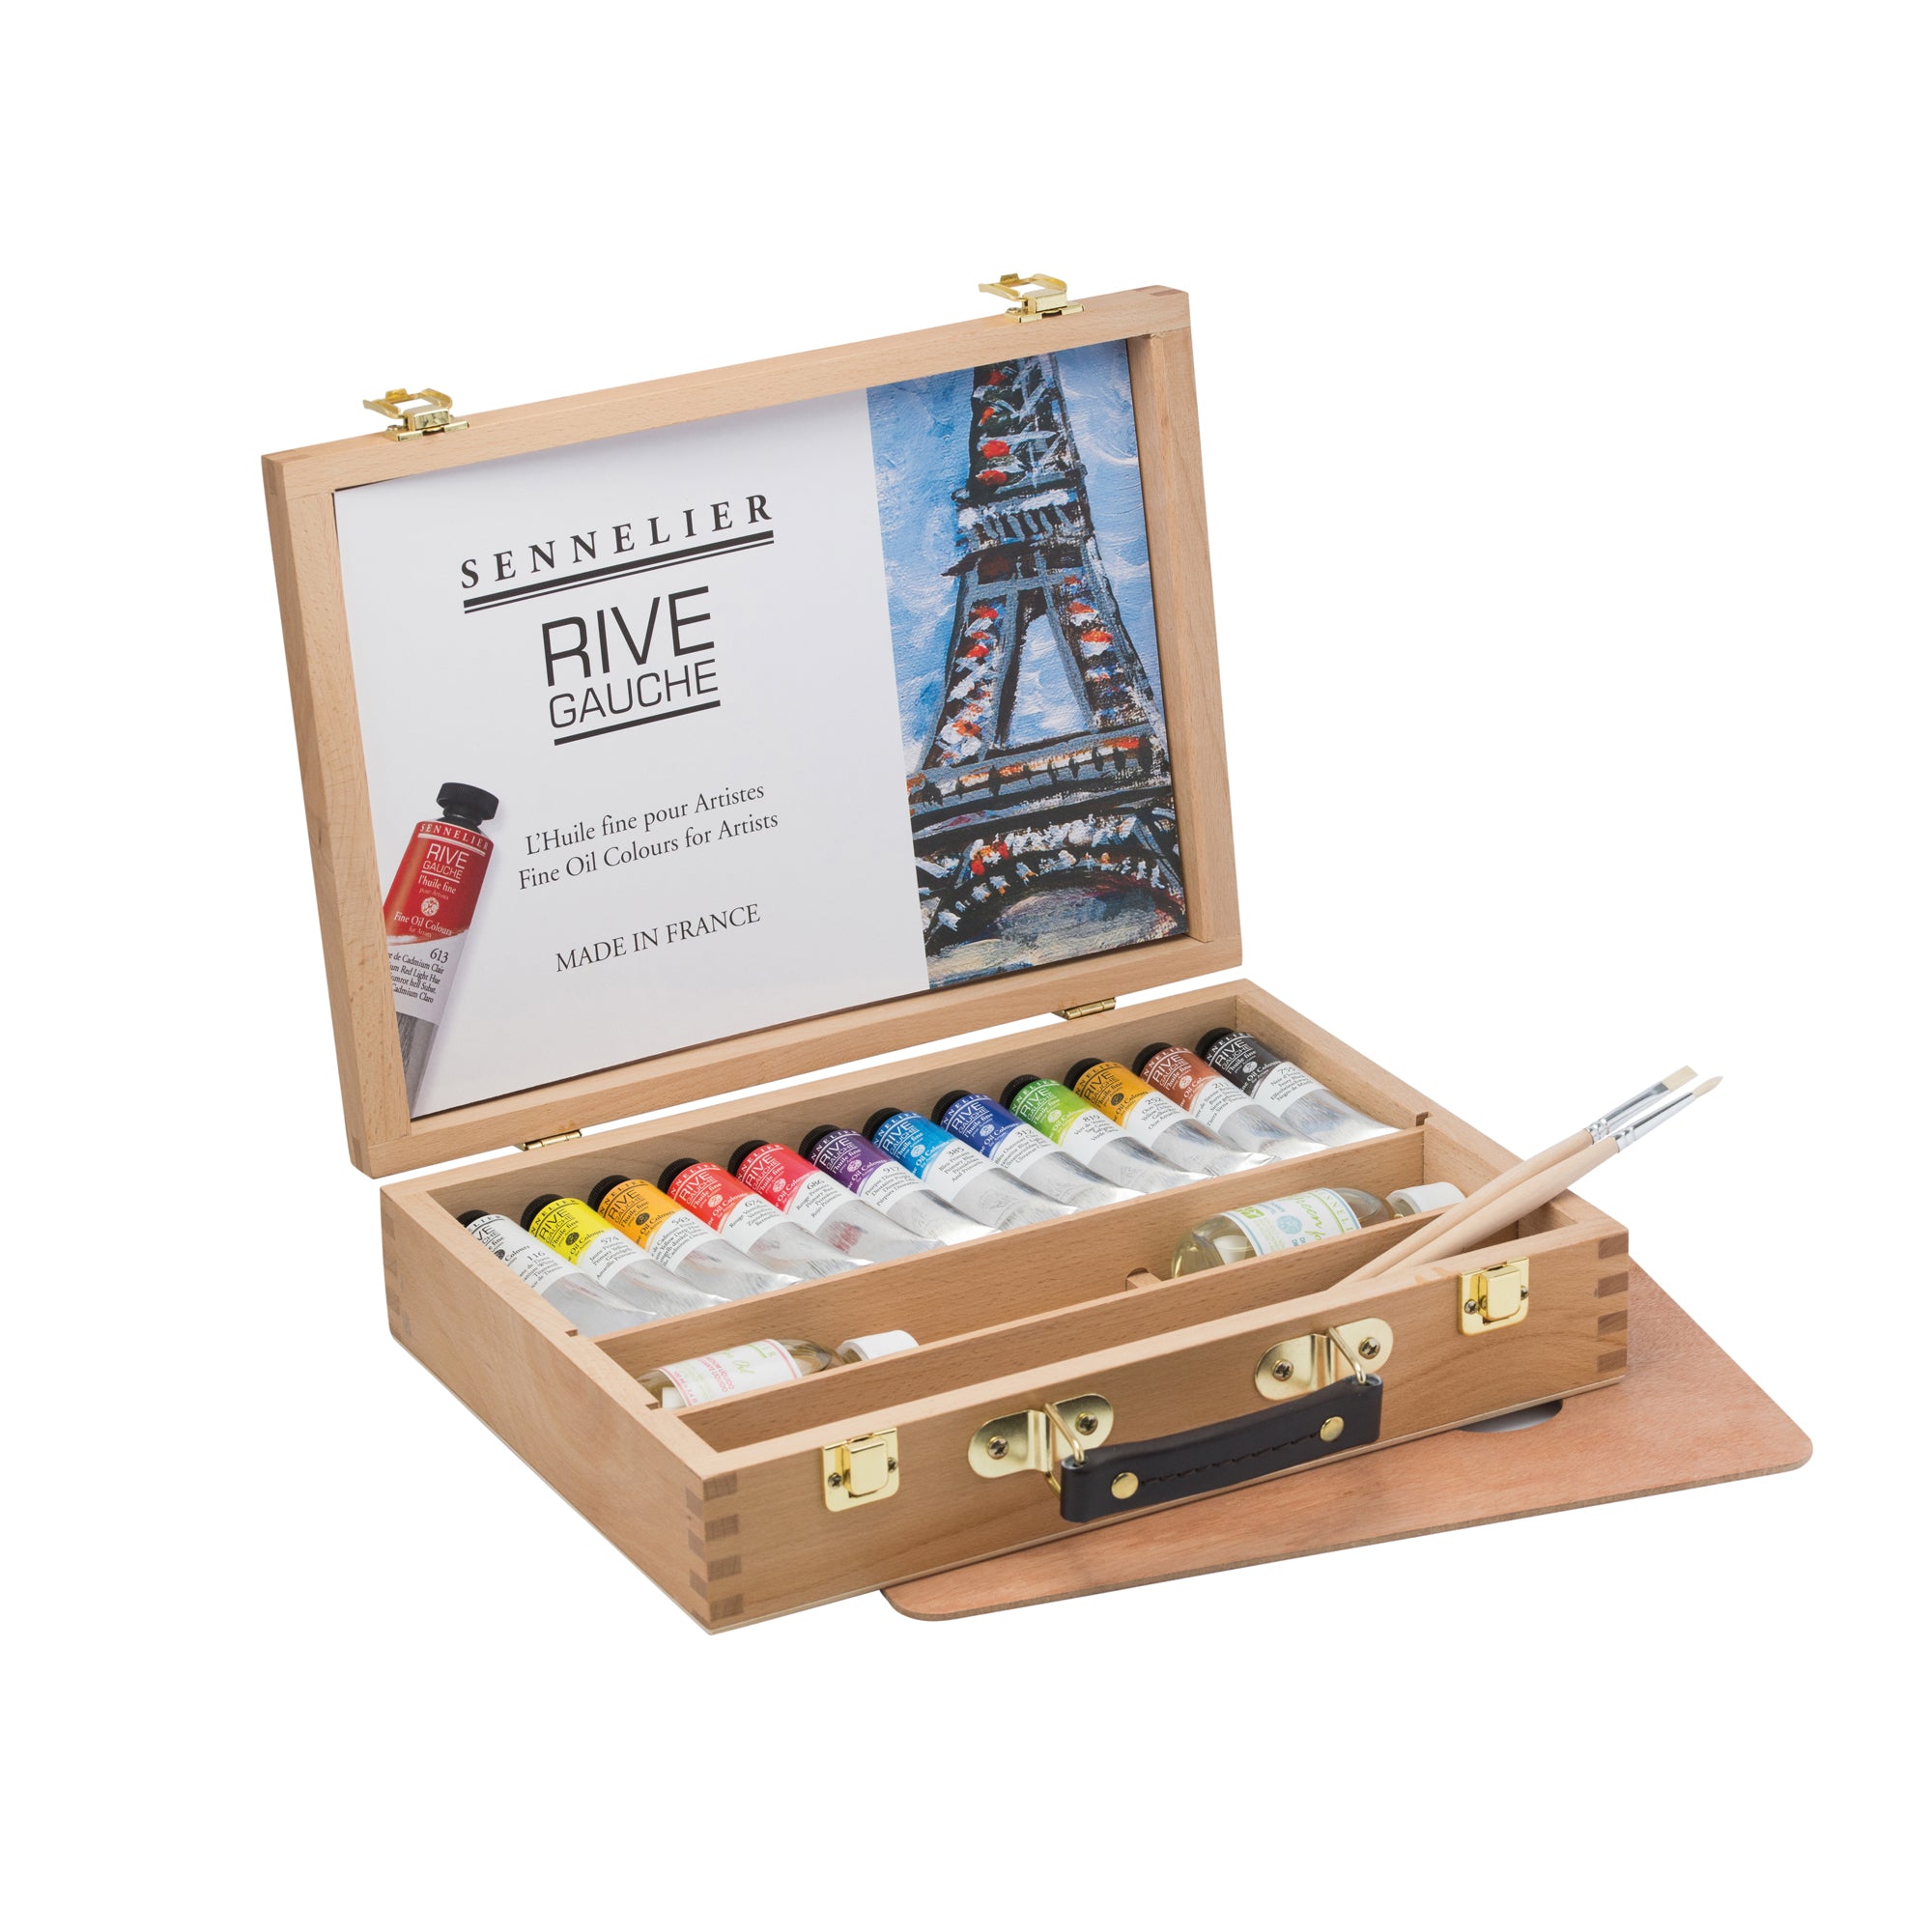 Sennelier Rive Gauche (Fast Drying Oils) - Wooden Box Set